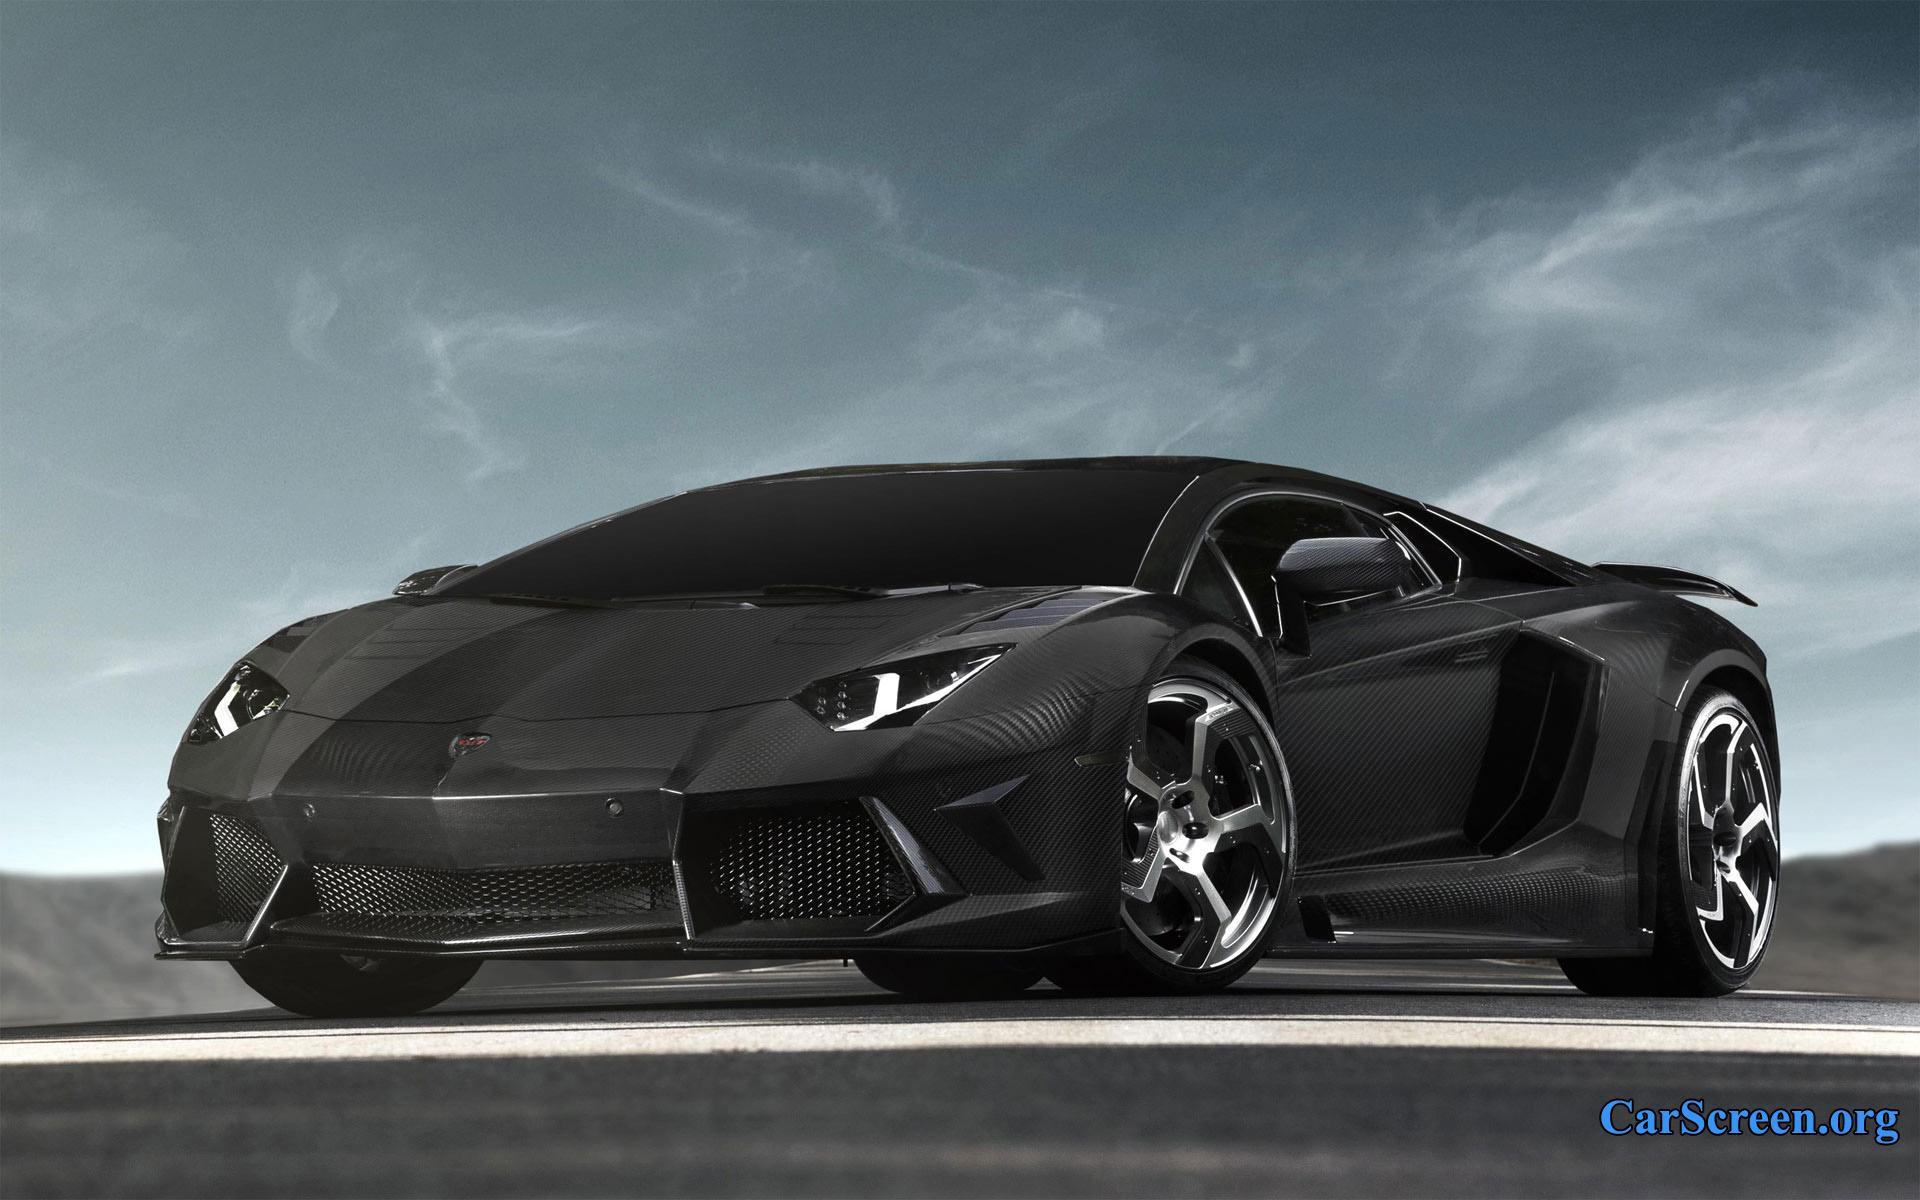 The Lamborghini Aventador HD Desktop Wallpaper Widescreen High